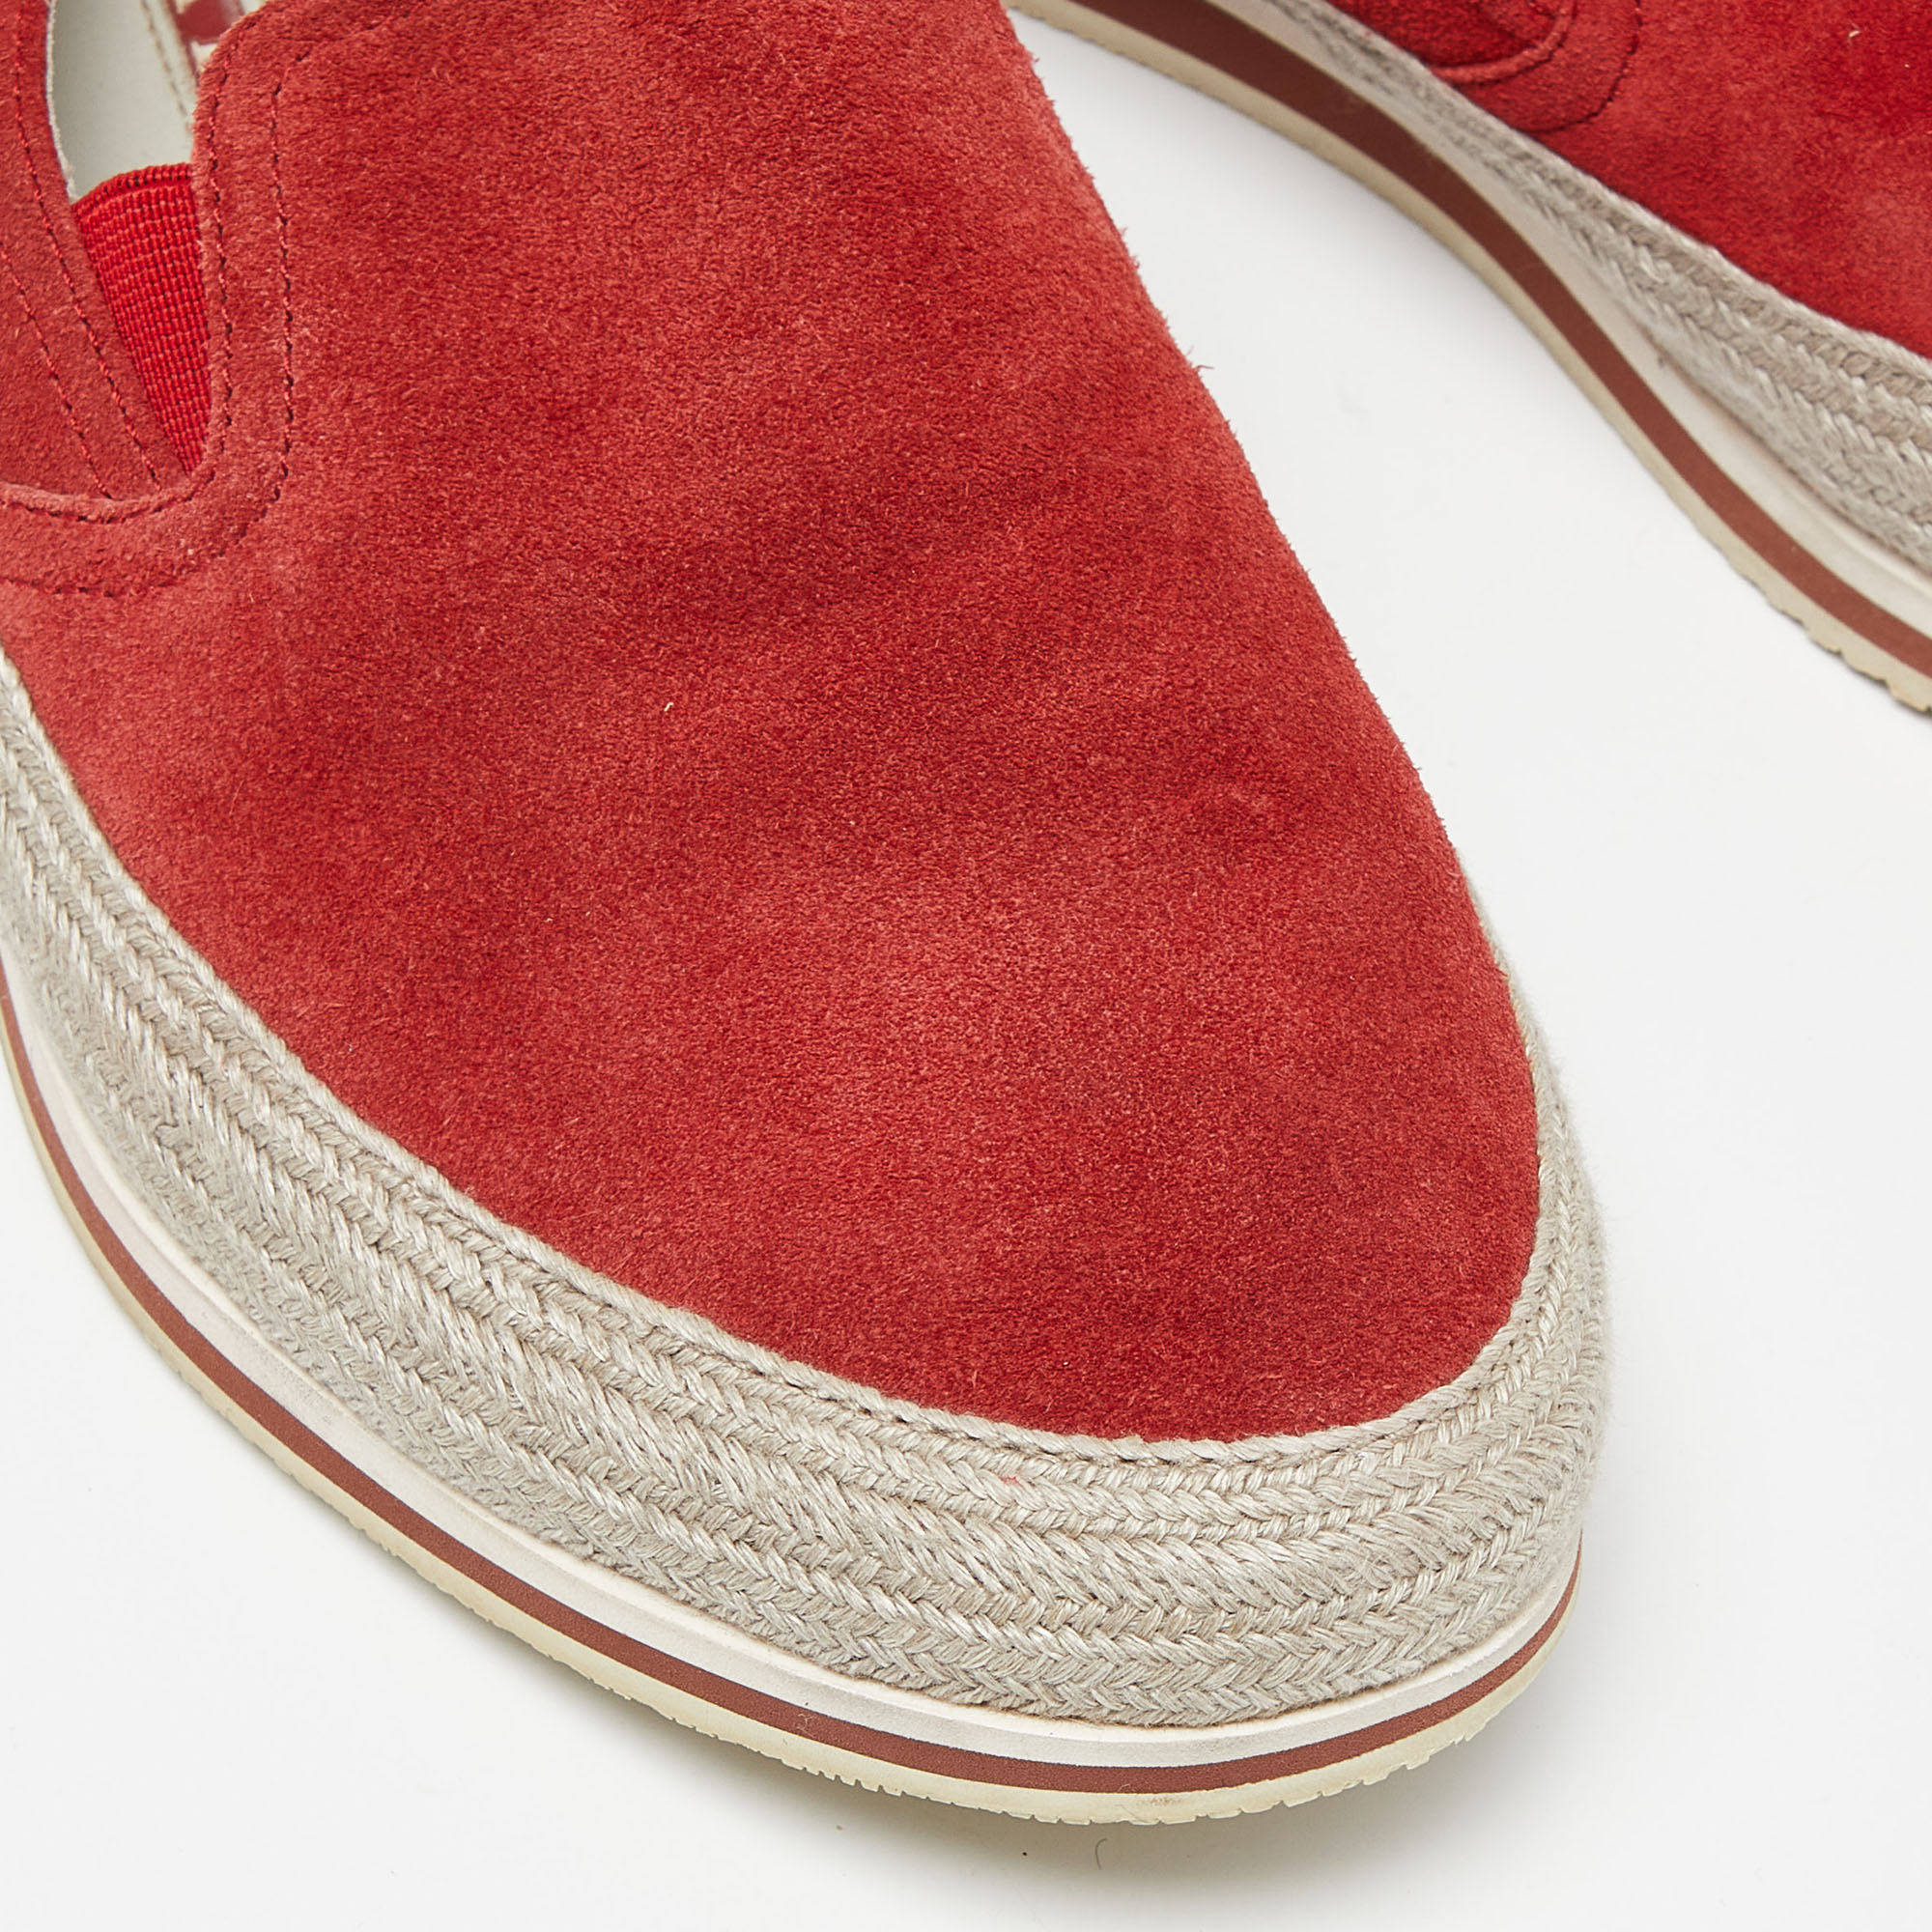 Prada Sport Red Suede Espadrille Slip On Sneakers Size 40.5